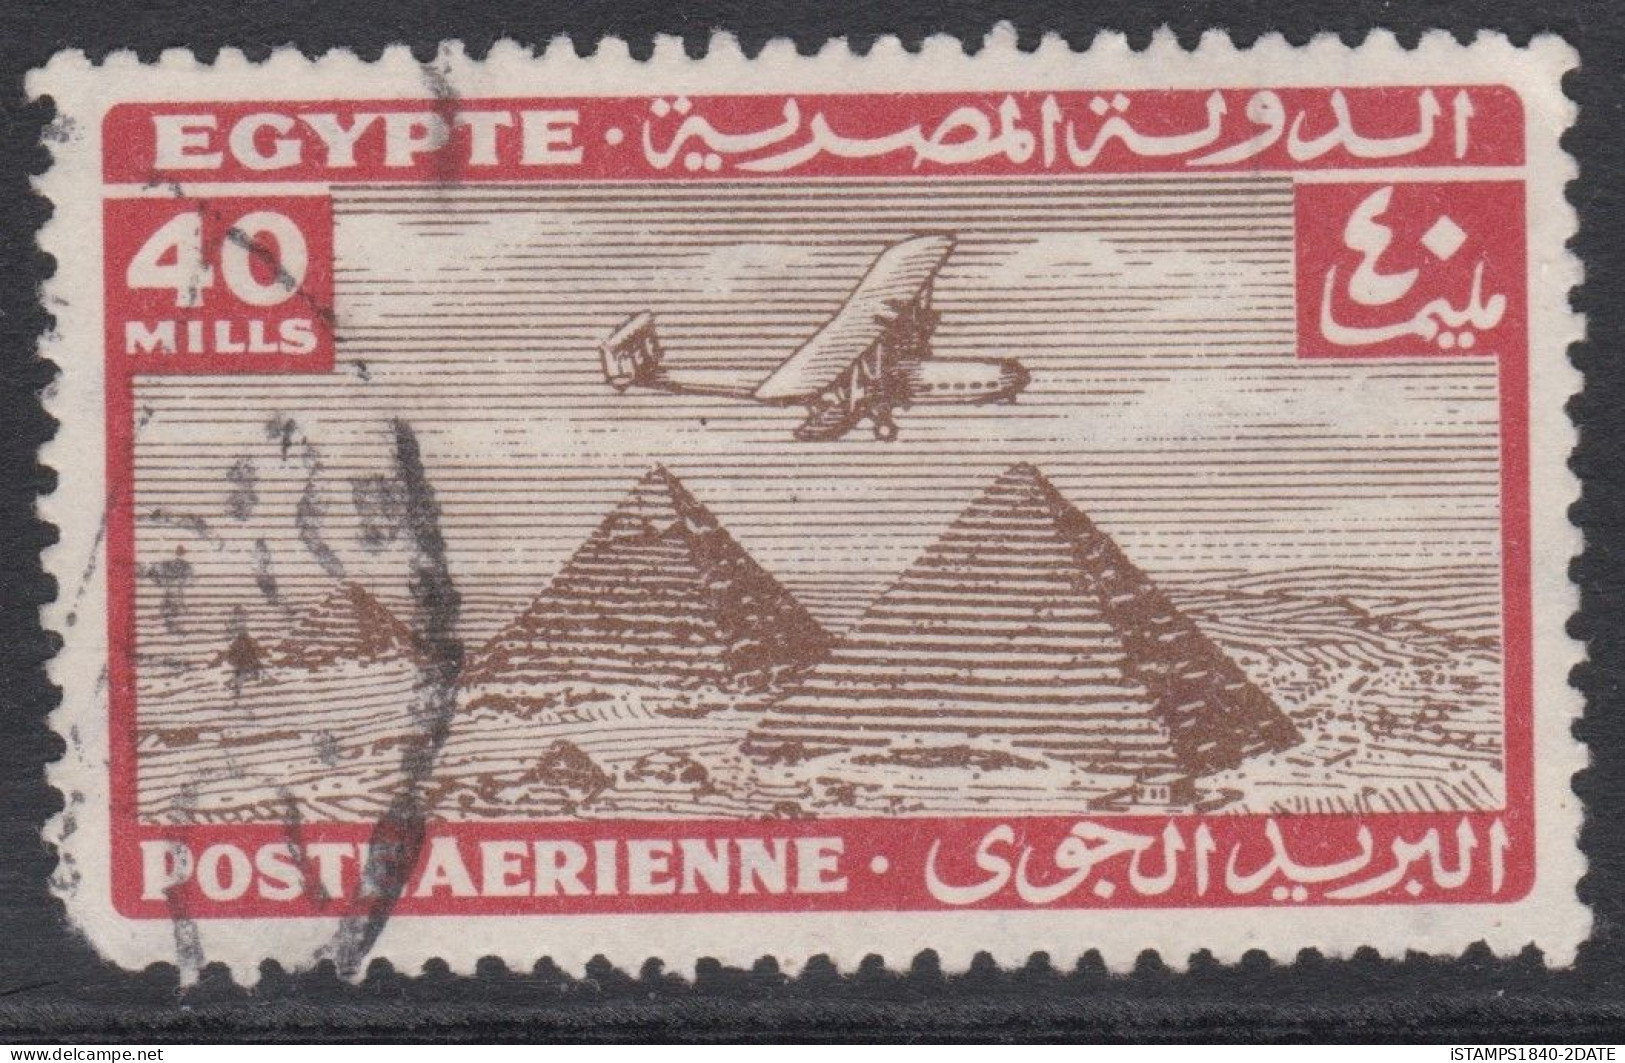 00680/ Egypt 1934/38 Air Mail 40m Used Plane Over Pyramid - Posta Aerea